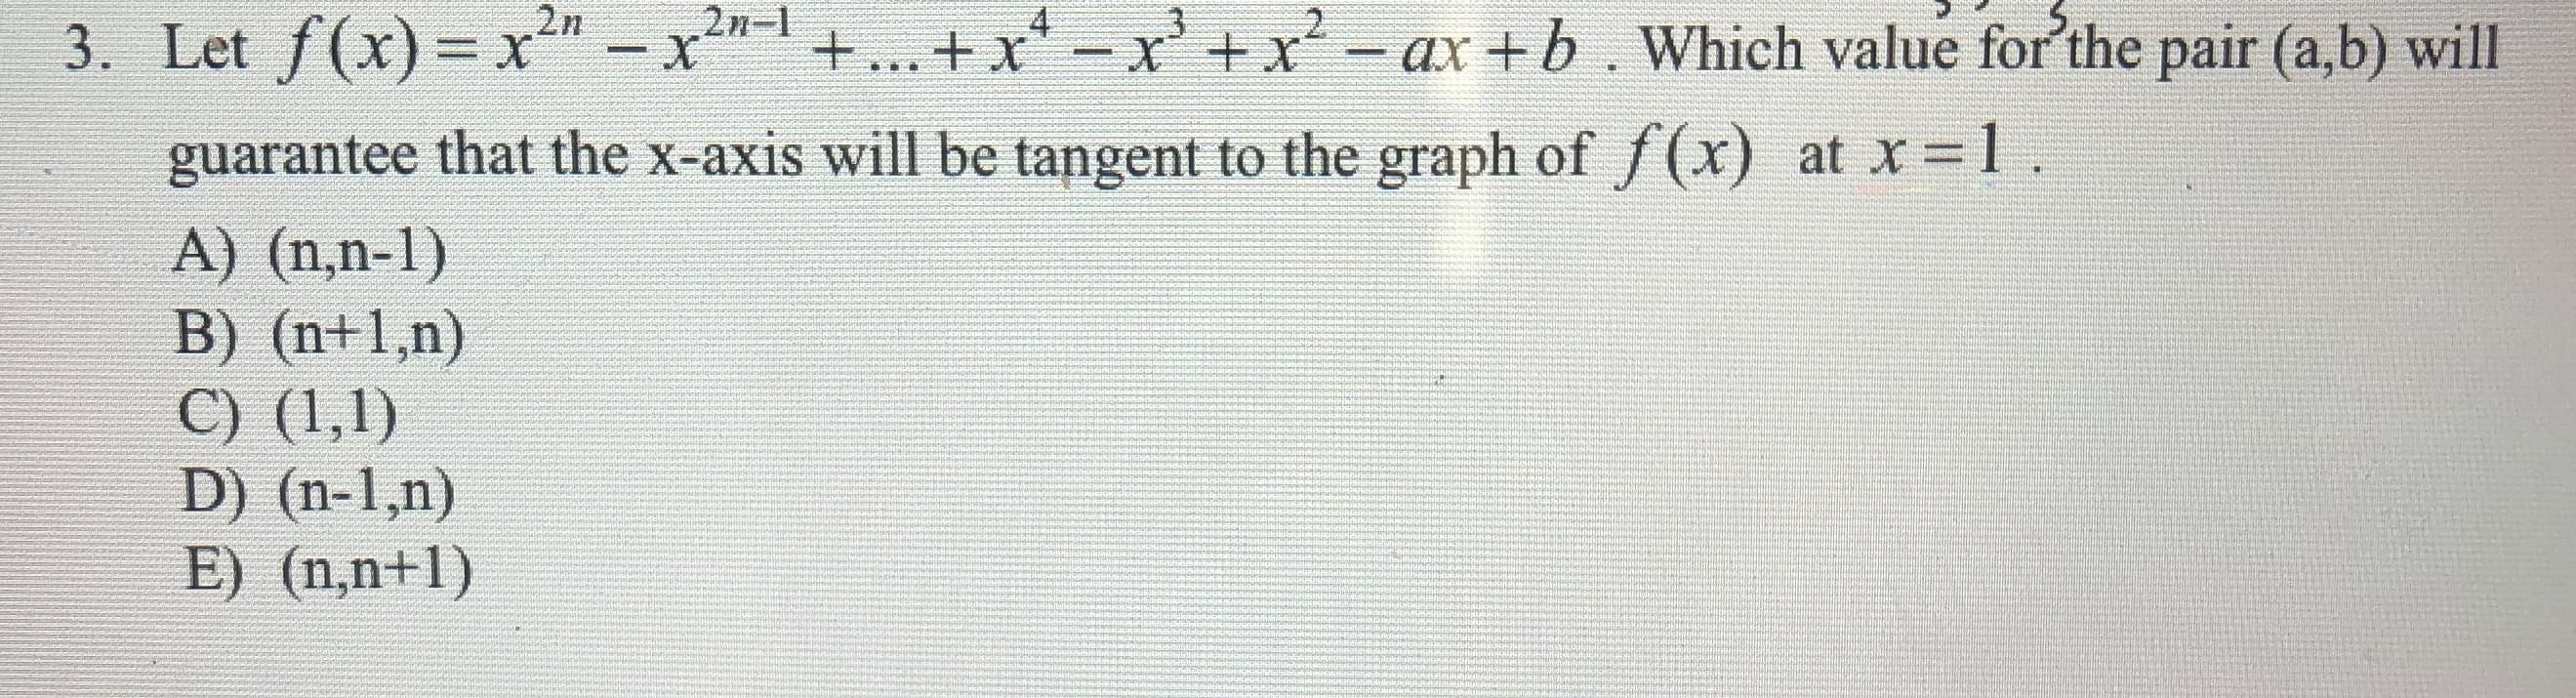 2n-
X
2n
3. Let f(x)- x-x
+... + xxx-ax+b. Which value for'the pair (a,b) will
X
guarantee that the x-axis will be tangent to the graph of /(x)
at x 1
A) (n,n-1)
B) (n+1,n)
C) (1,1)
D) (n-1,n)
E) (n,n+1)
